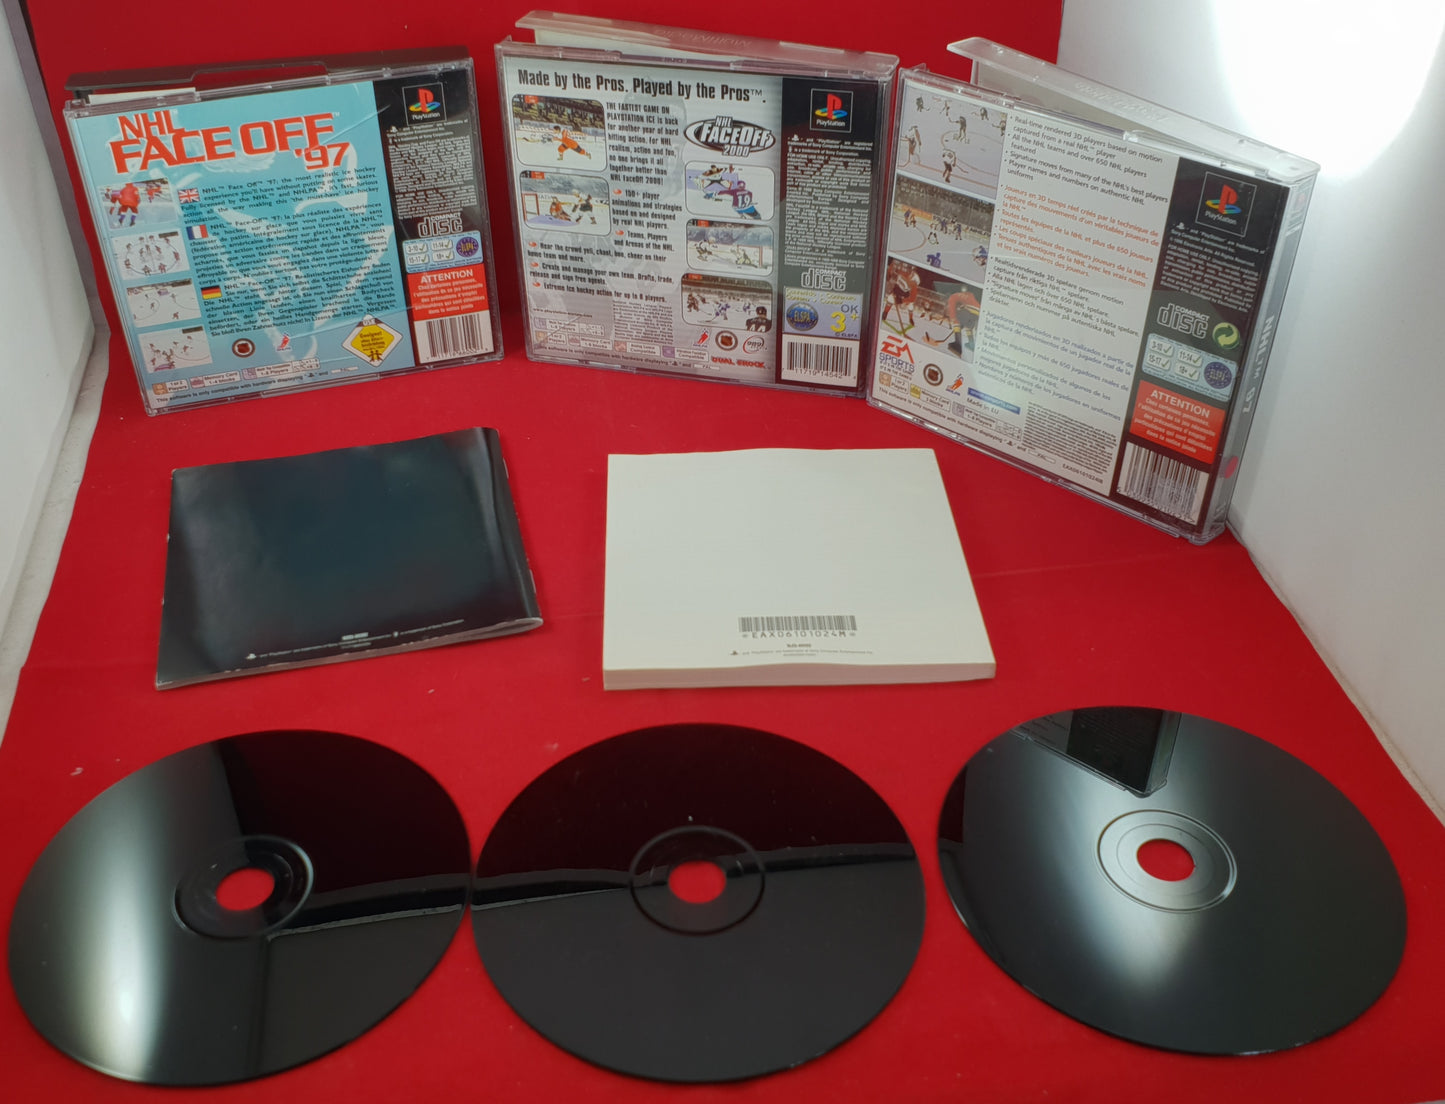 NHL Faceoff 97, 2000 & NHL 97 Sony Playstation 1 (PS1) Game Bundle